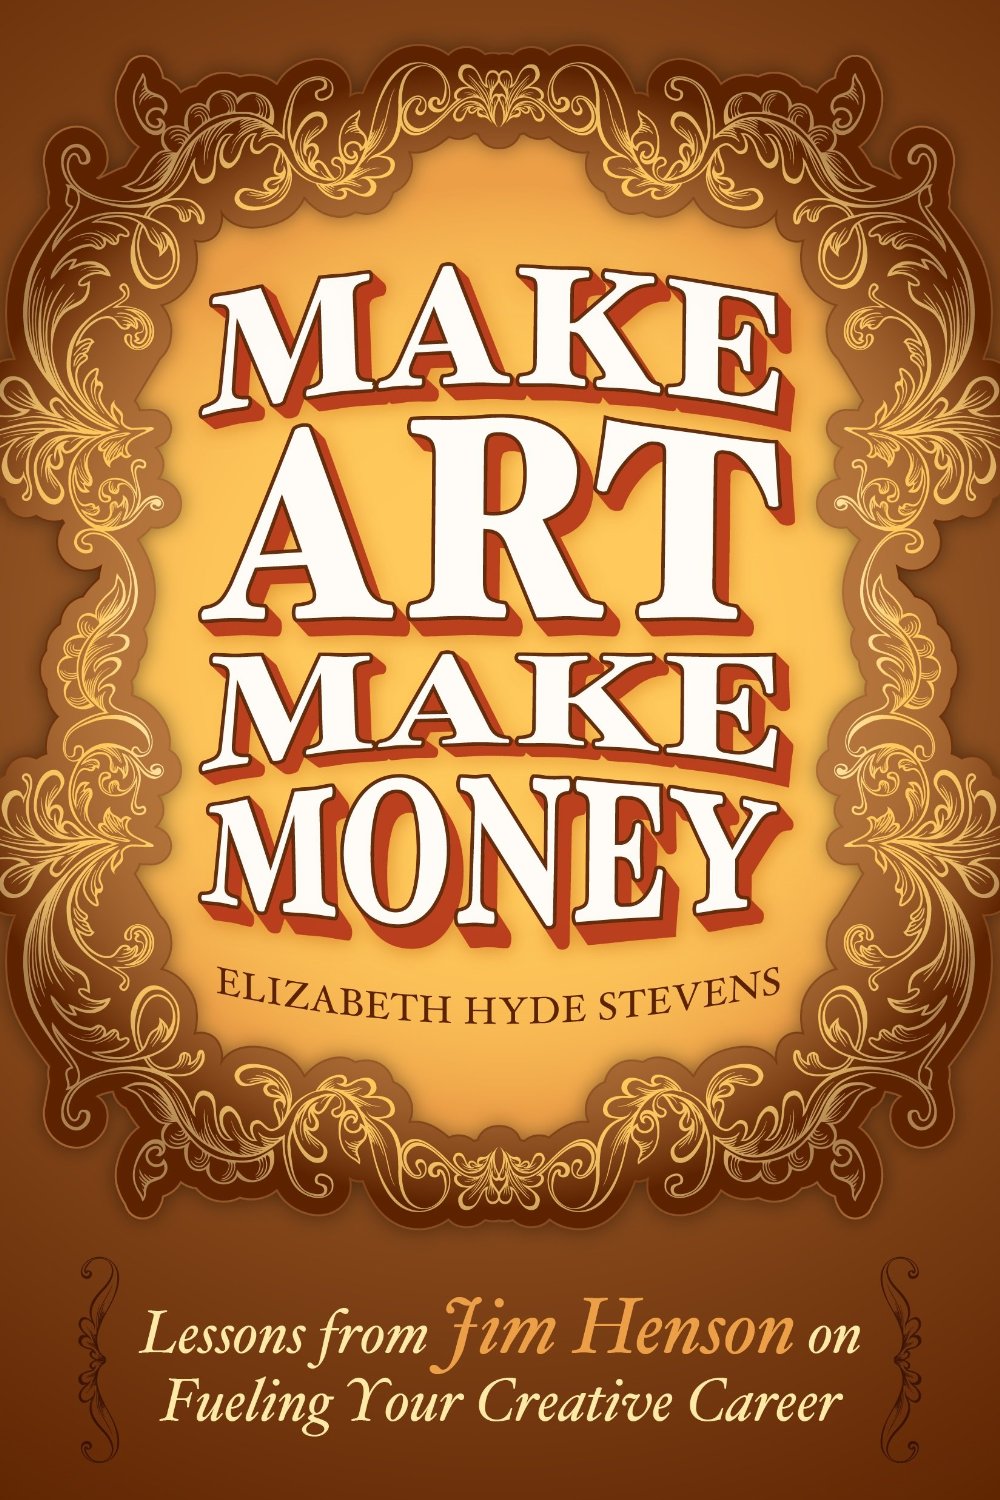 NEW: The Best Art Business Books for Artists - Art Business Info. for  Artists